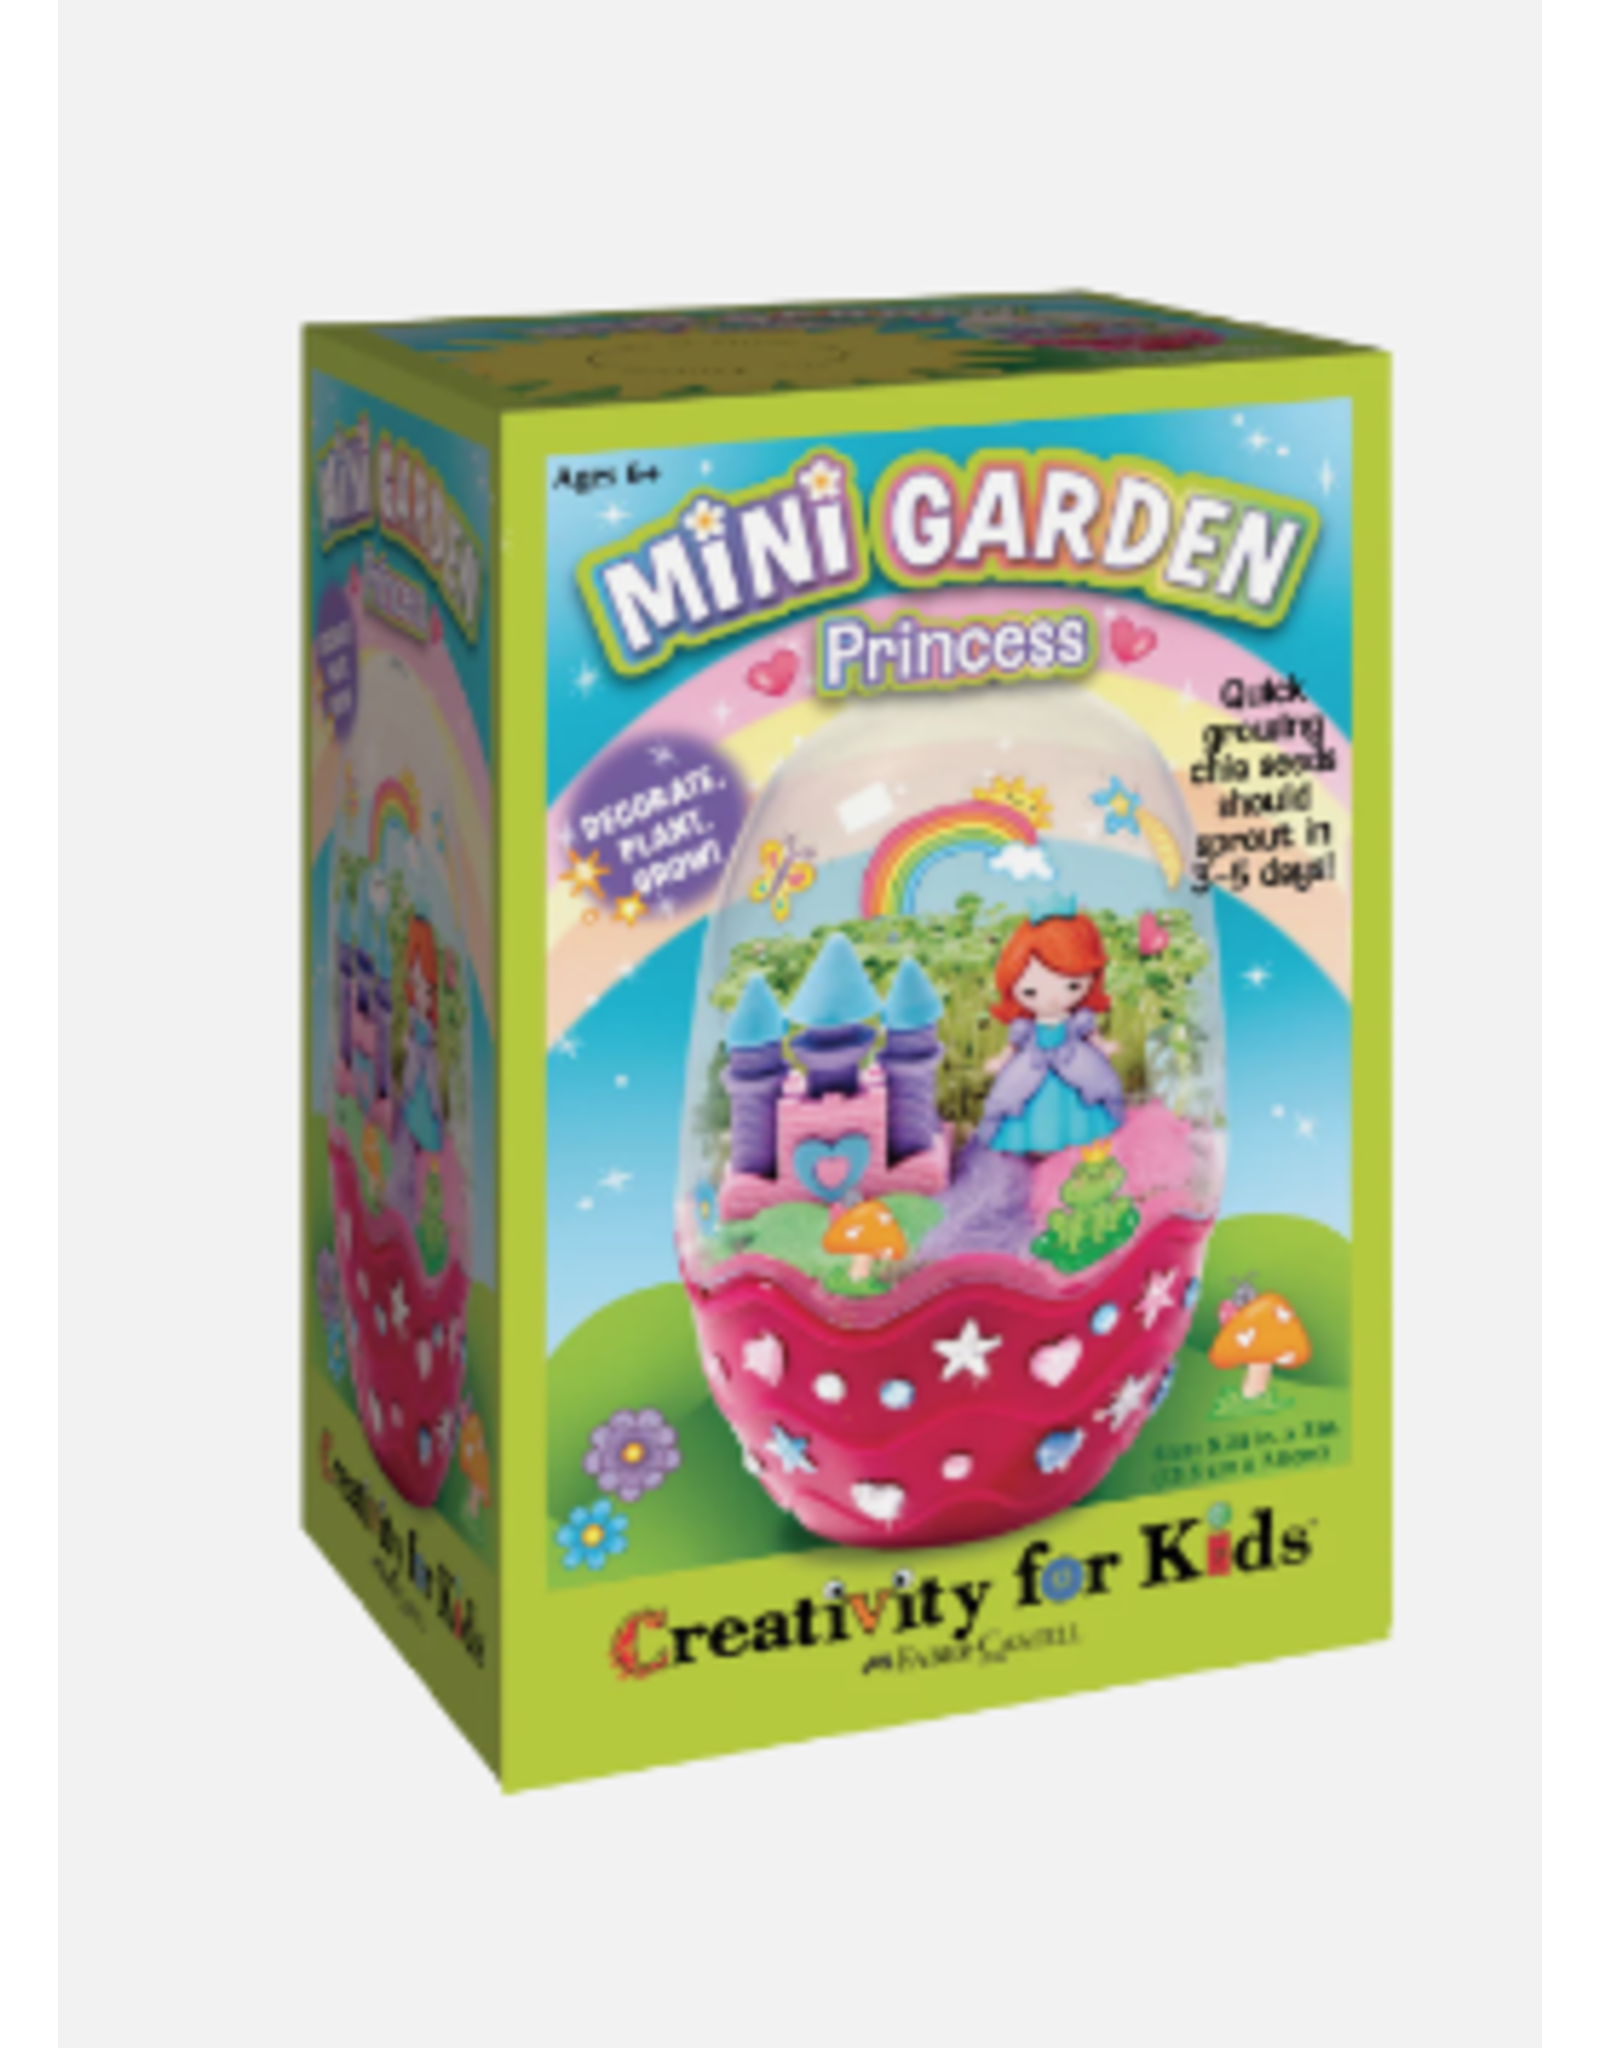 Creativity For Kids Mini Garden Princess